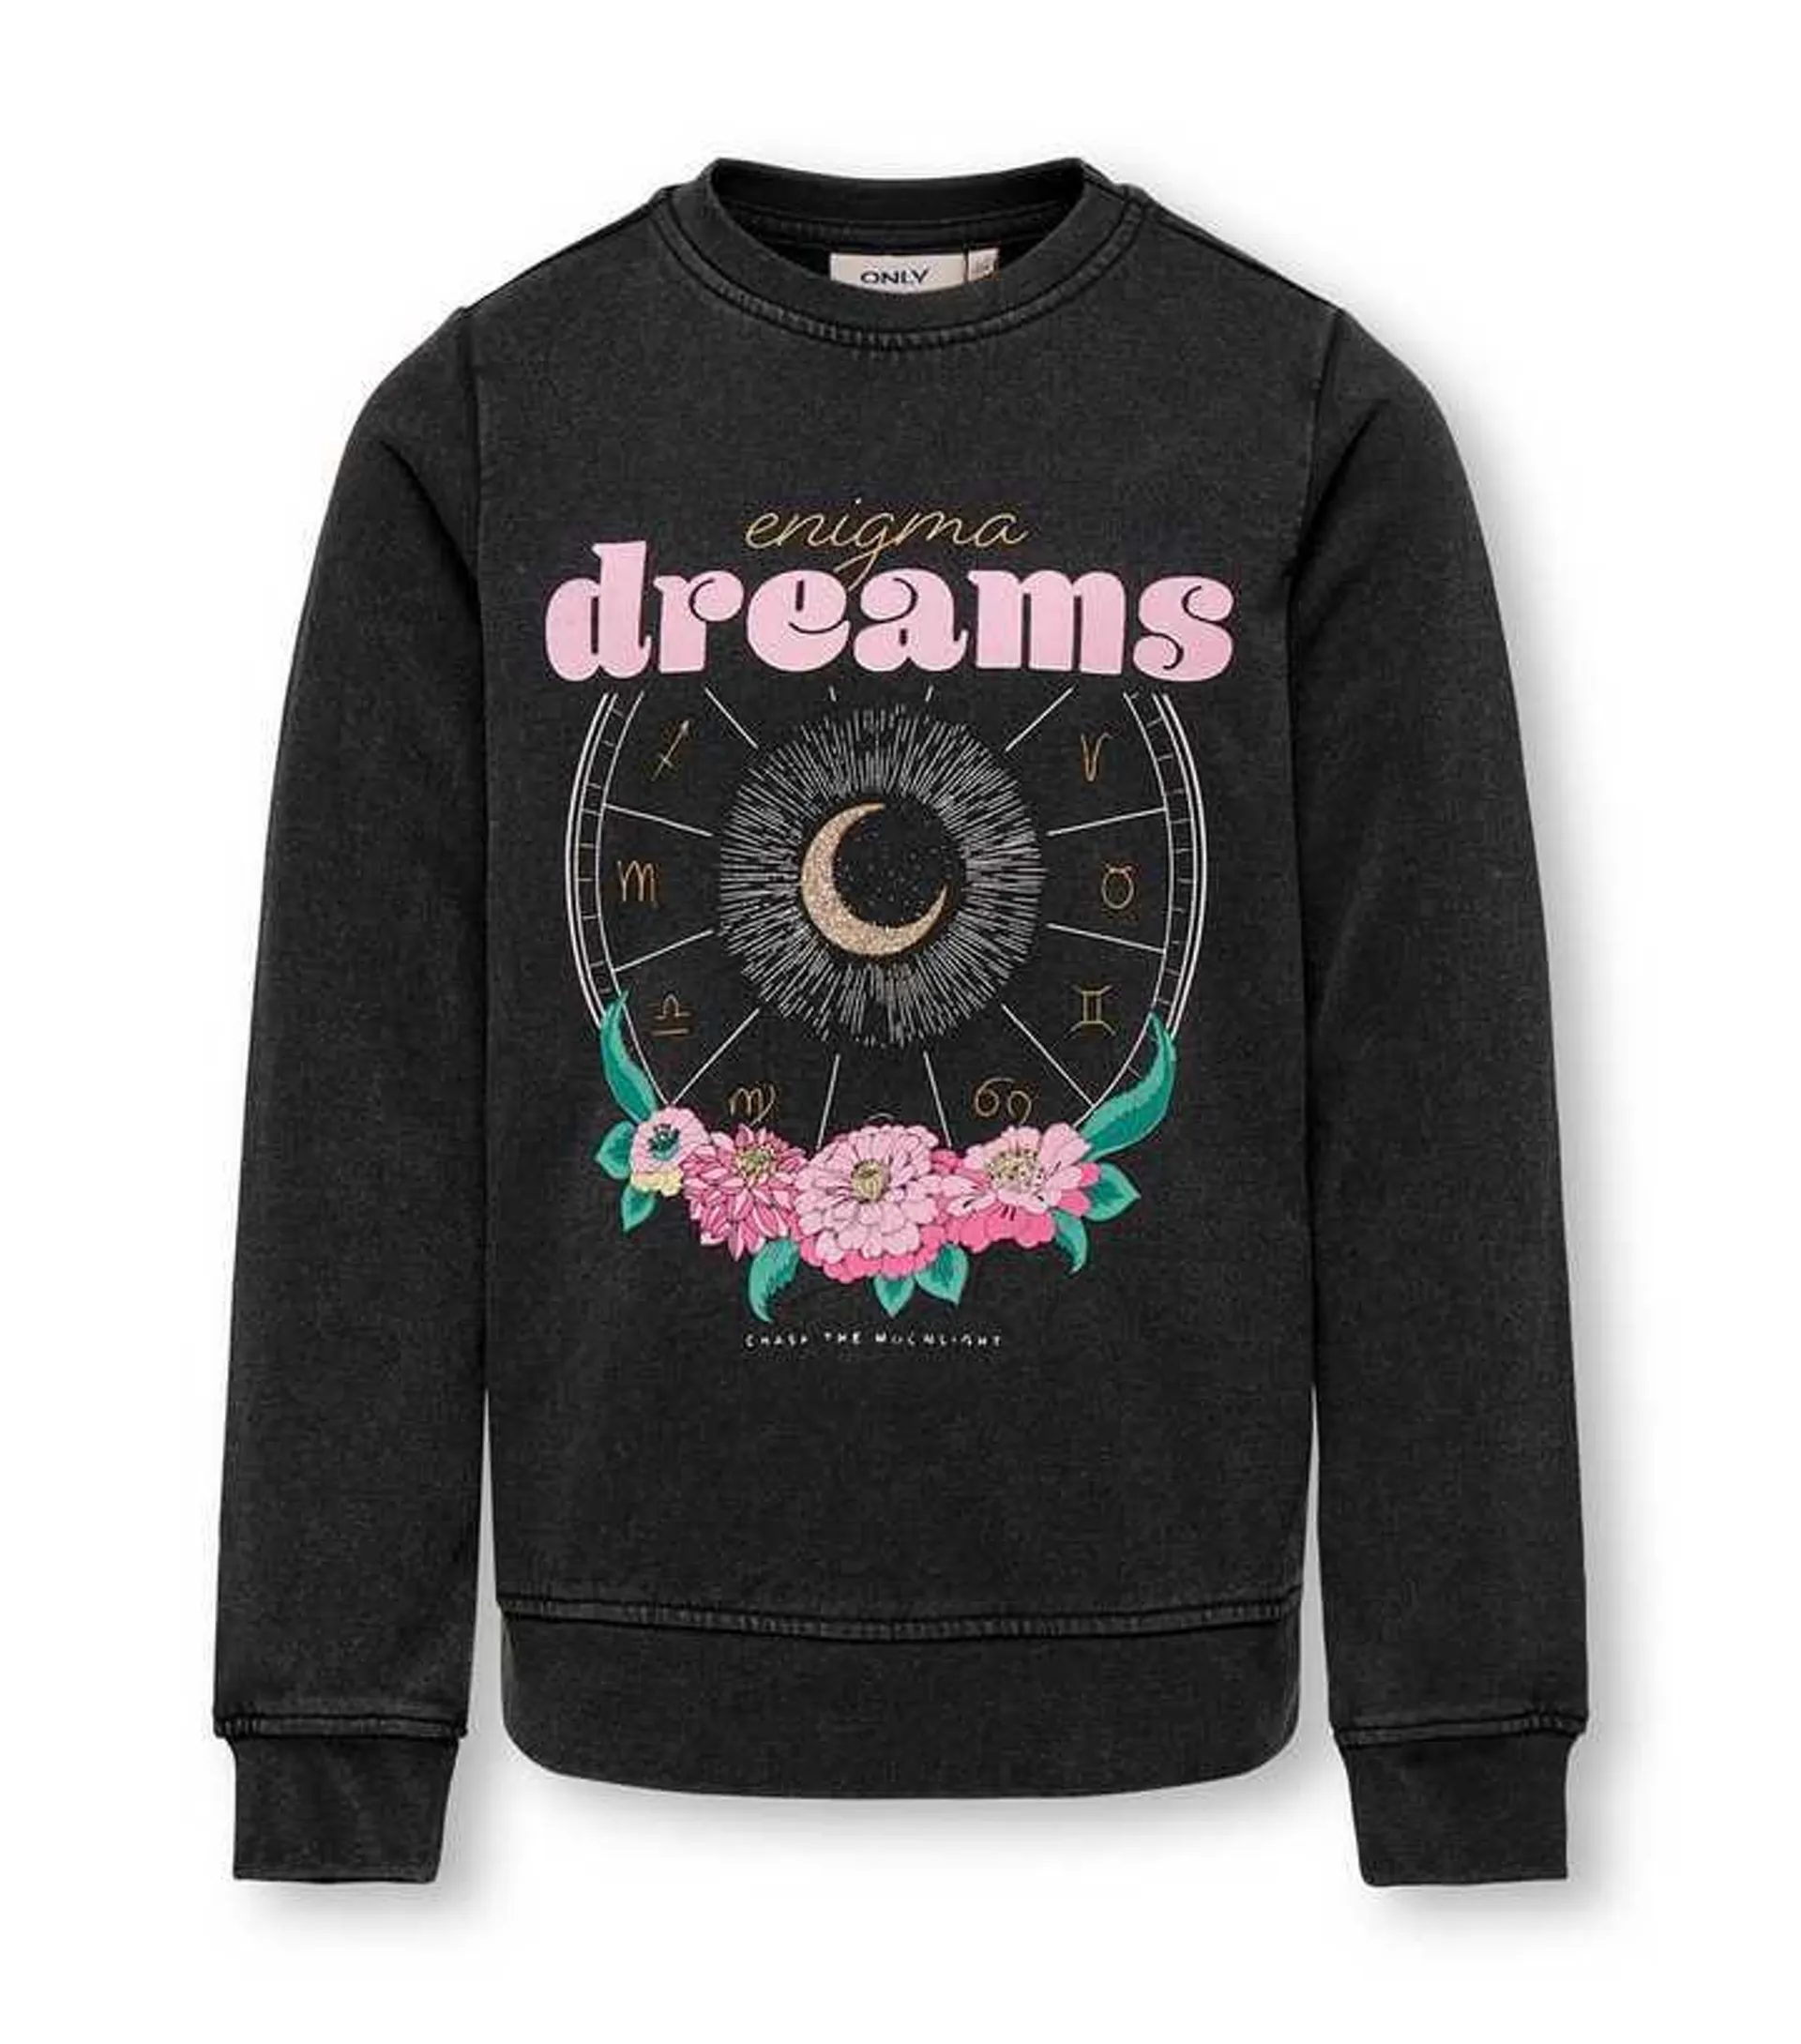 KIDS ONLY Black Acid Wash Dreams Logo Sweatshirt